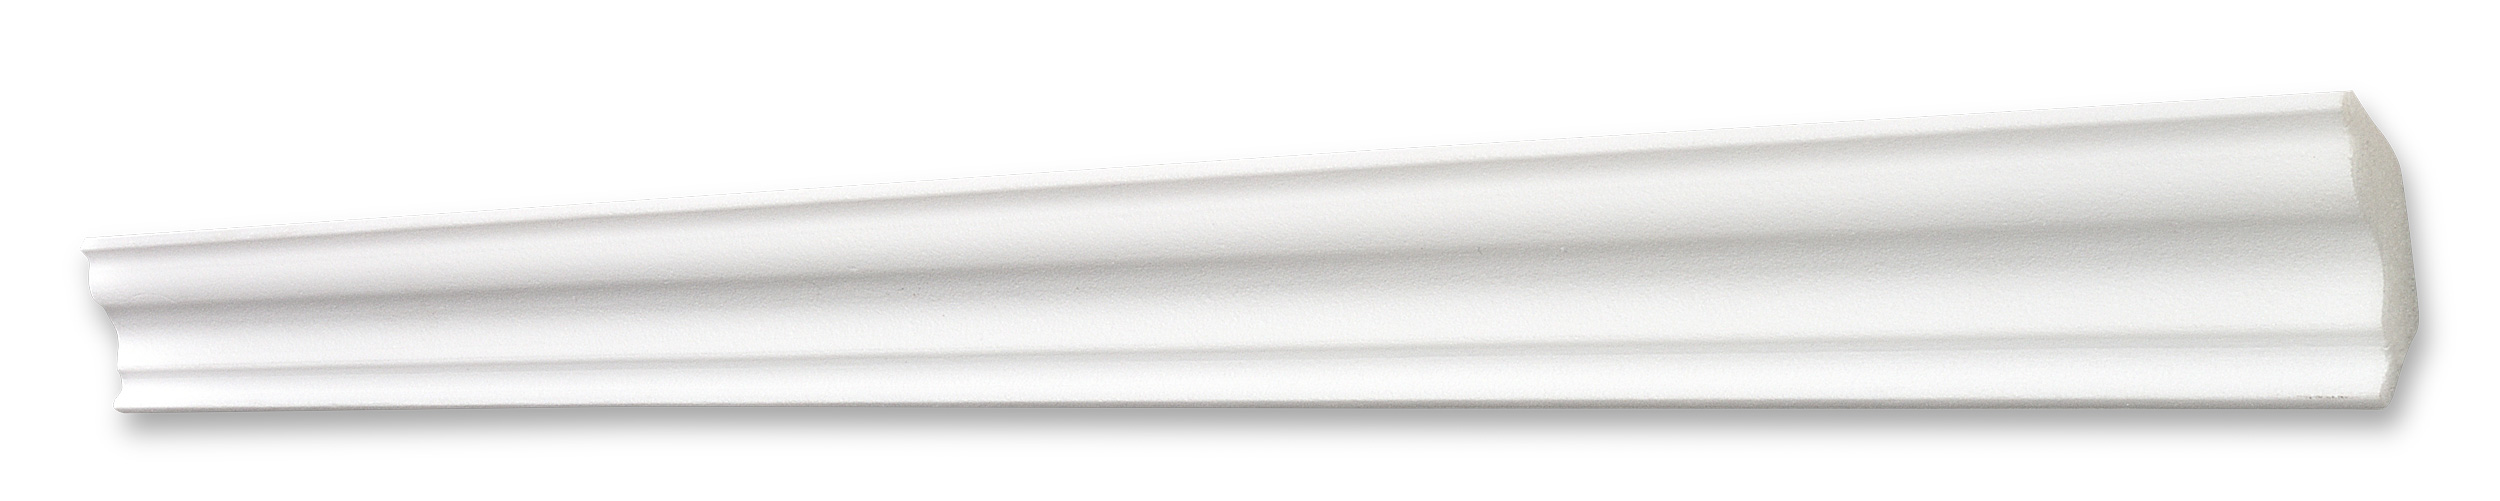 DECOSA Moulure S30 - polystyrène - blanc - 32 x 27 mm - longueur 2 m